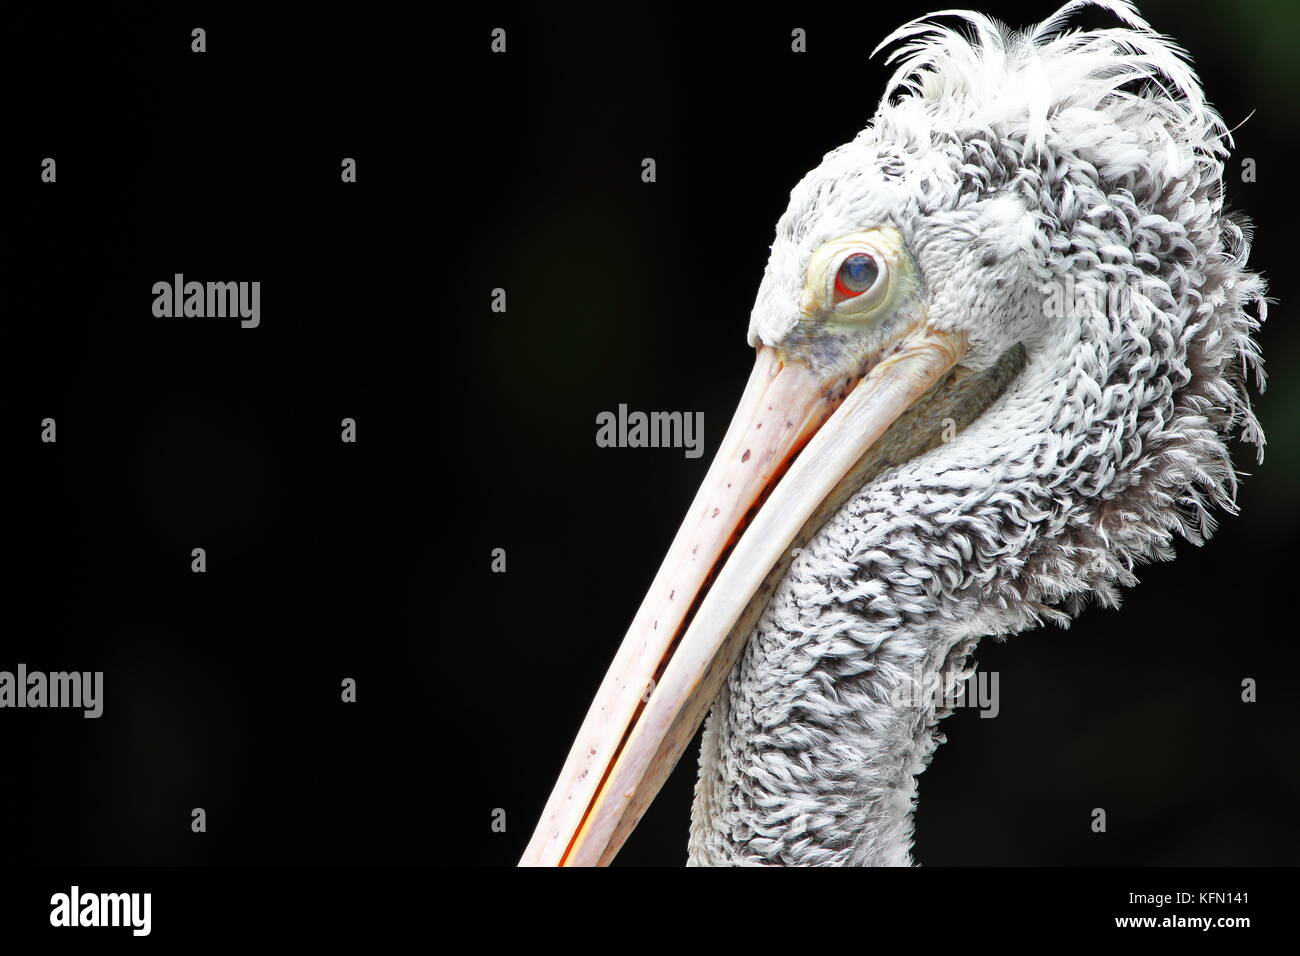 Pelican face close up Banque D'Images